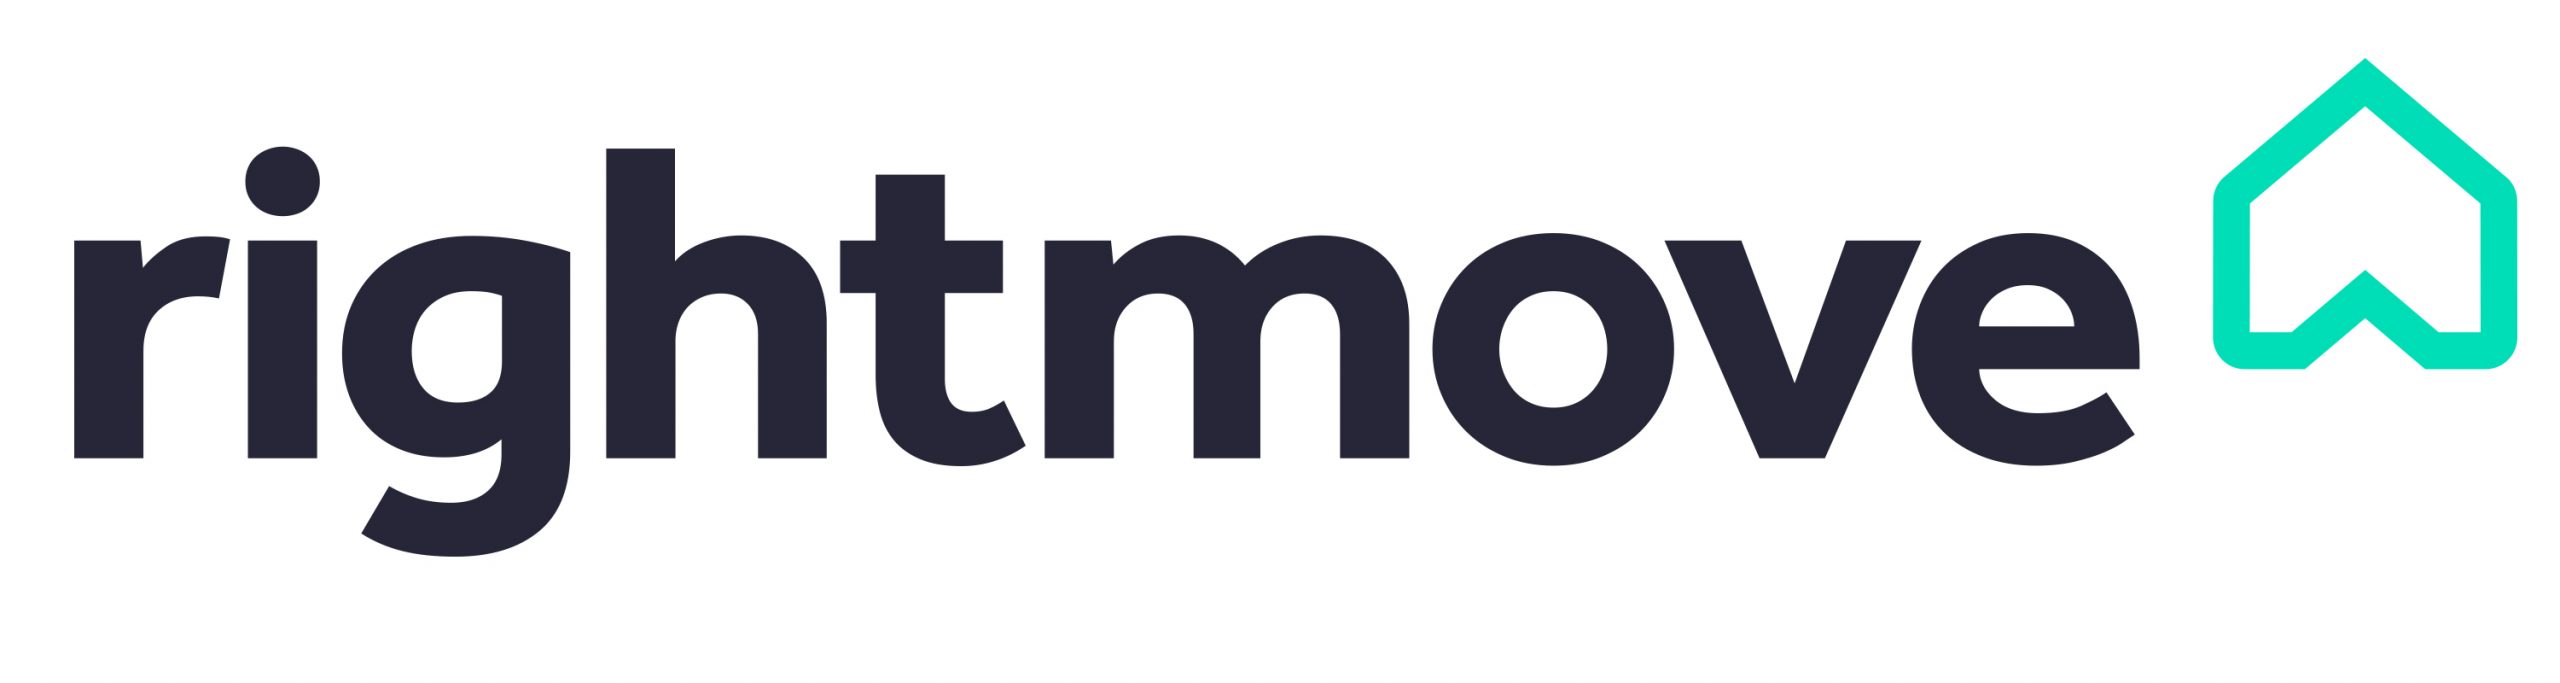 Rightmove logo